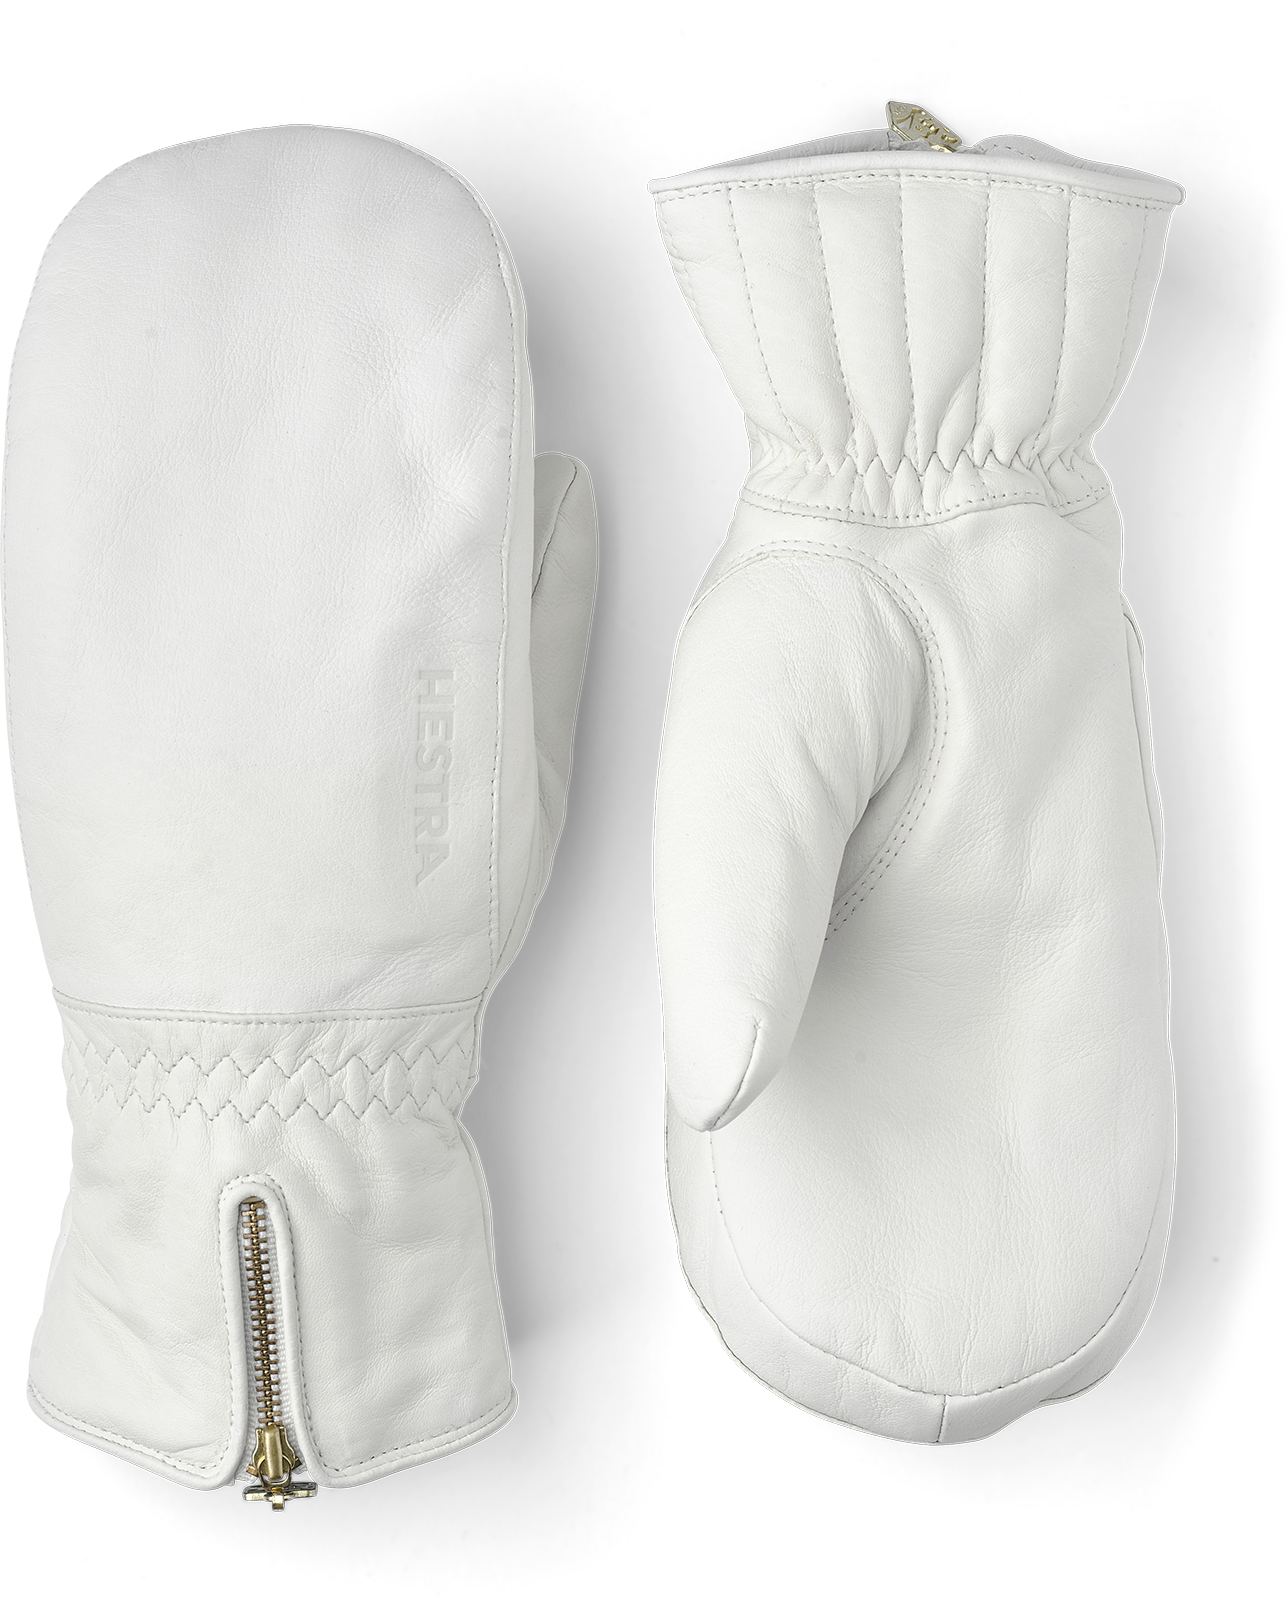 Leather Swisswool Classic Mitt - White | Hestra Gloves